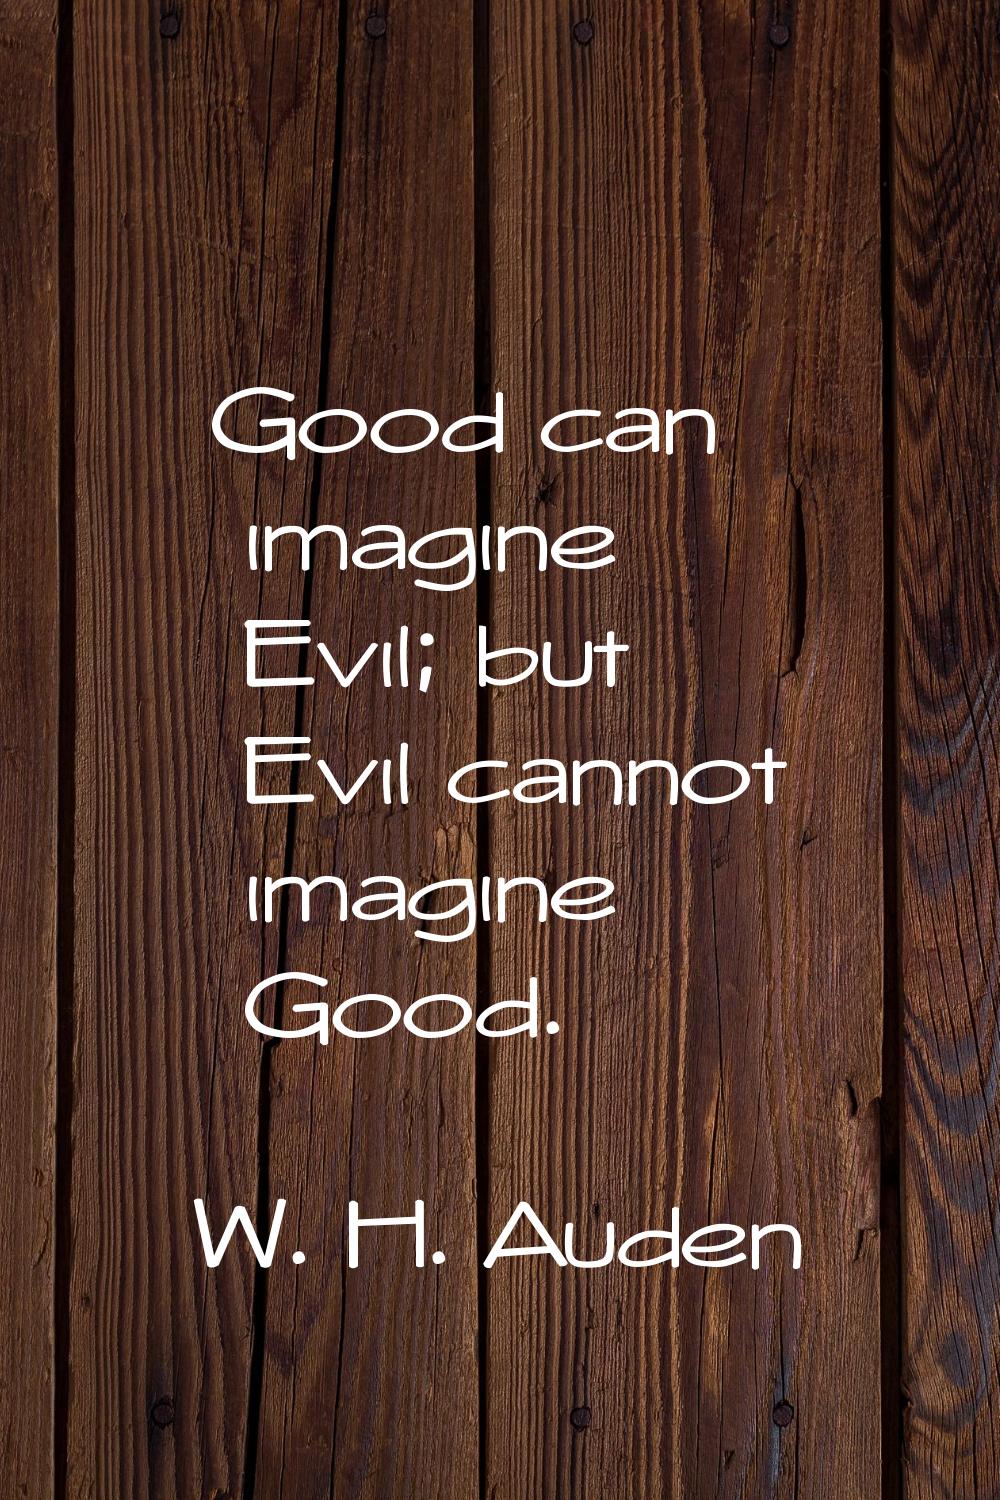 Good can imagine Evil; but Evil cannot imagine Good.